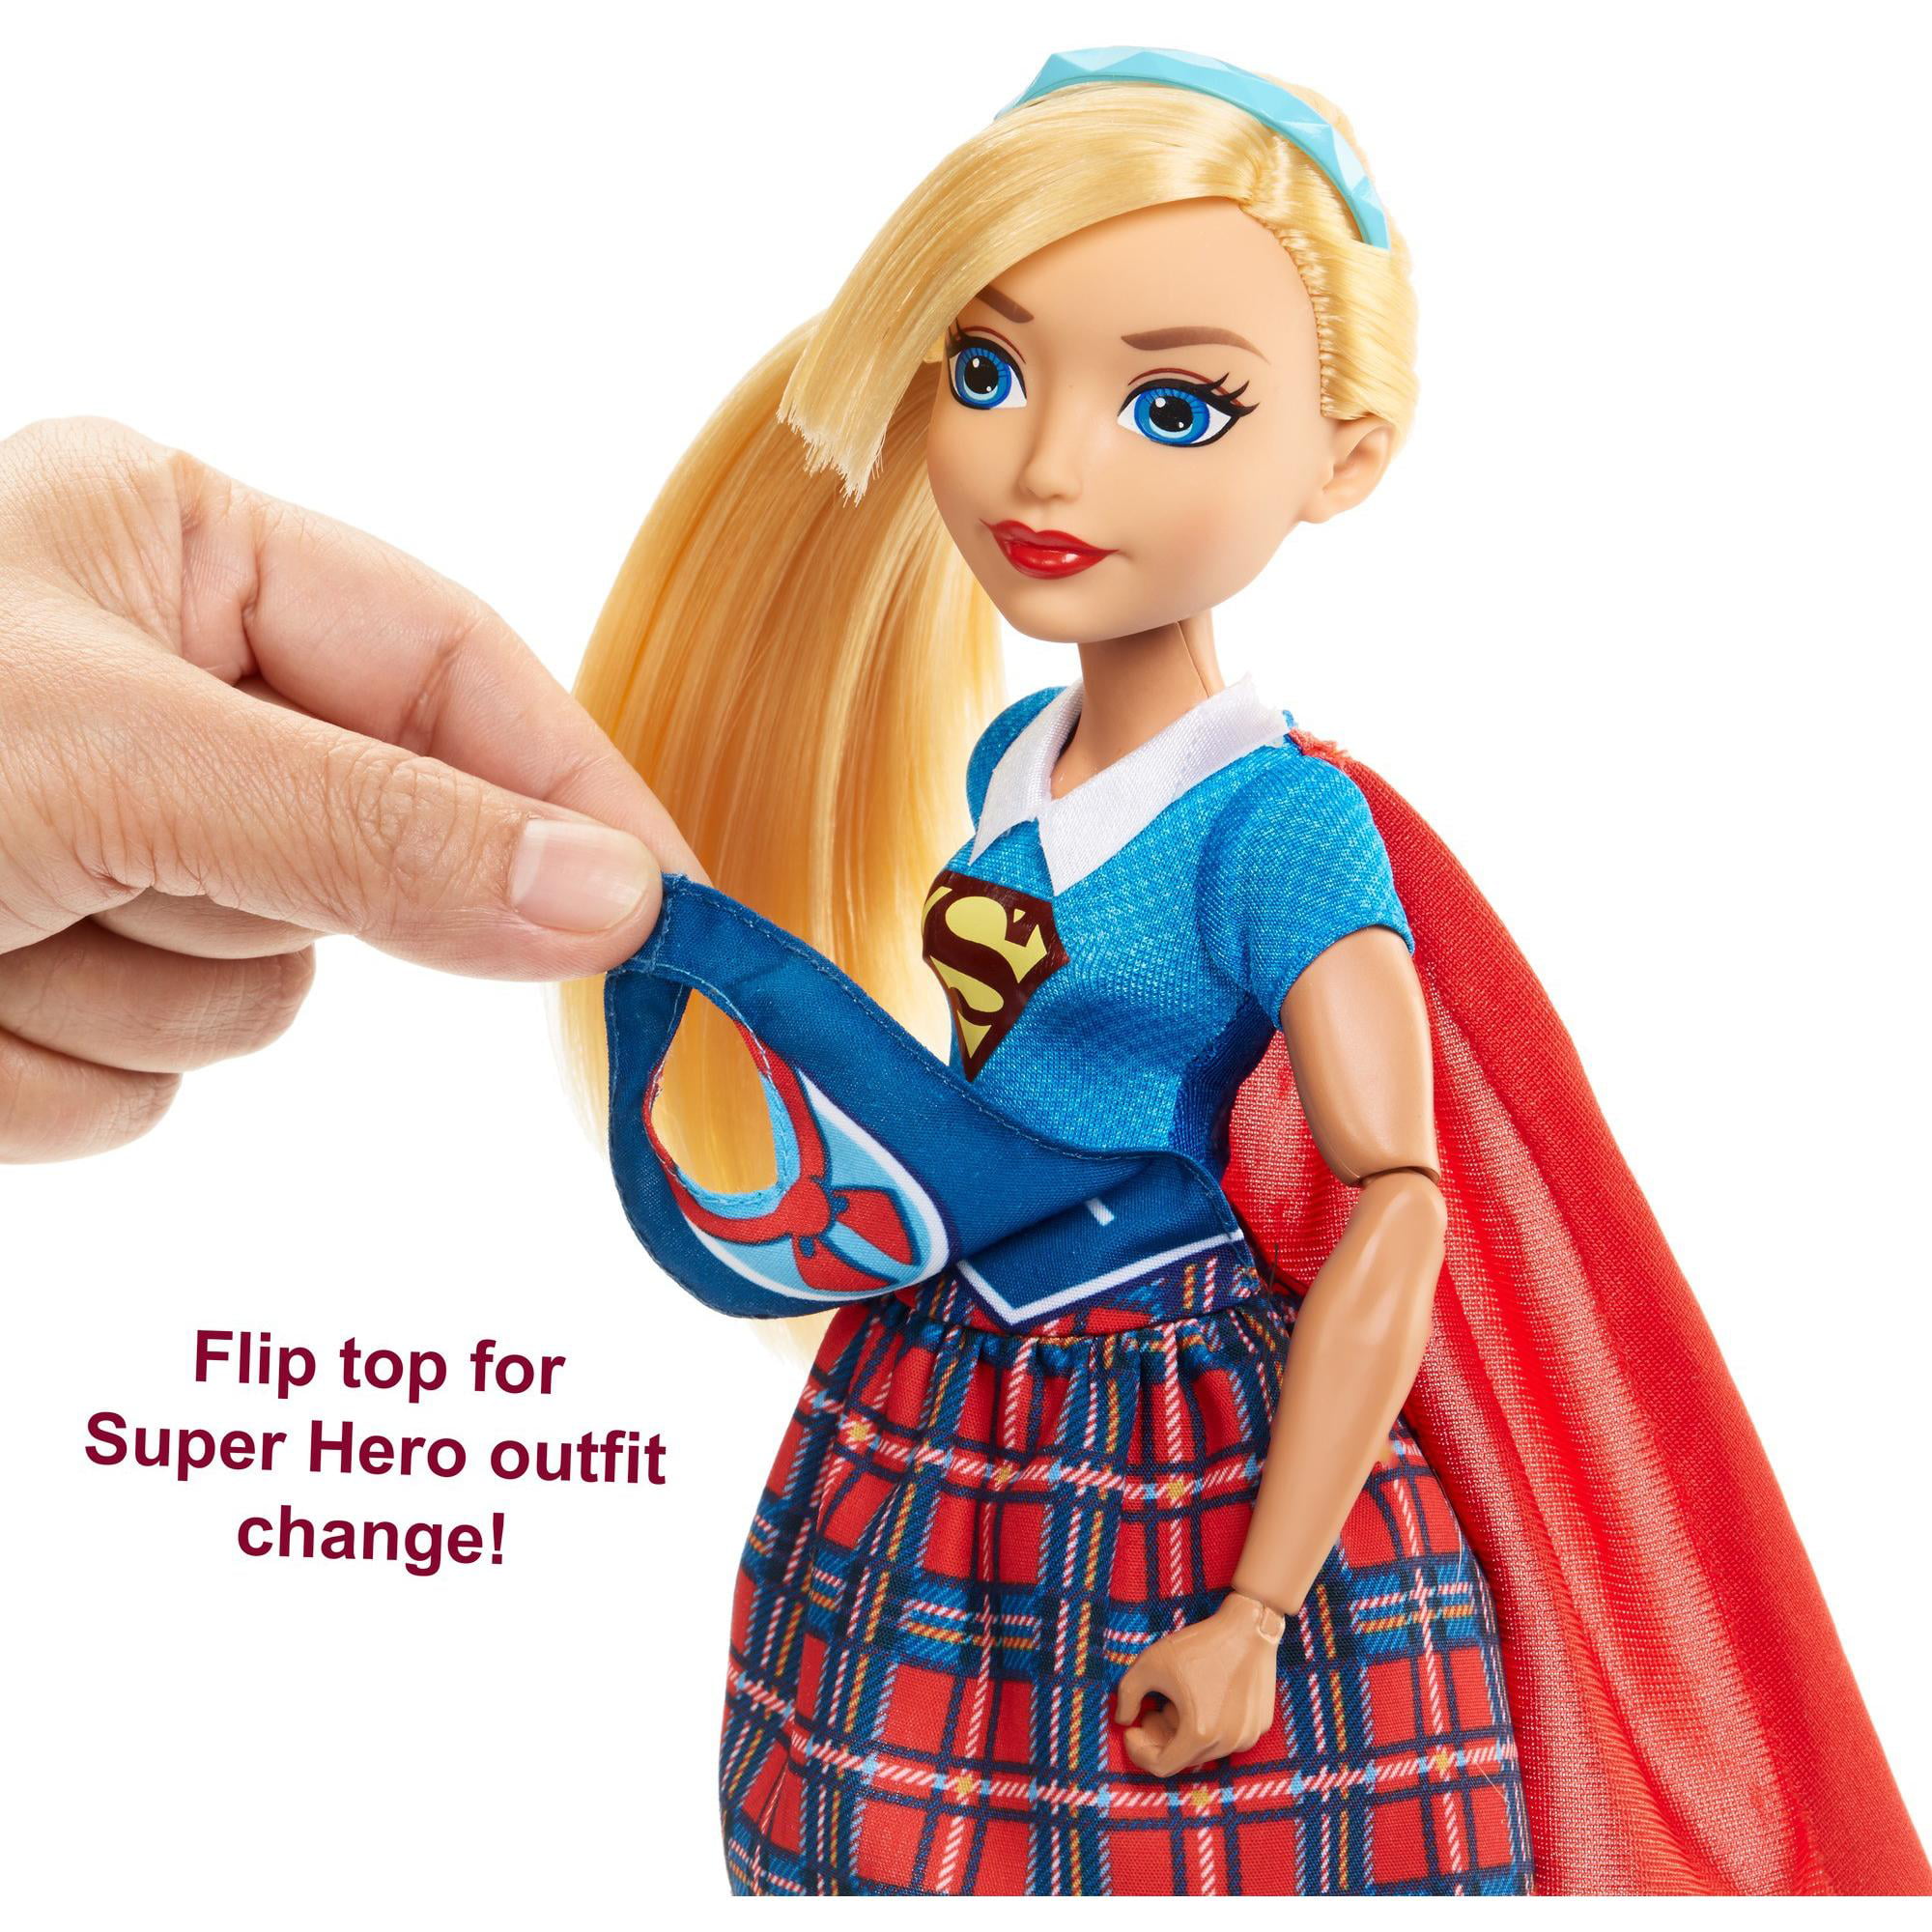 supergirl doll walmart